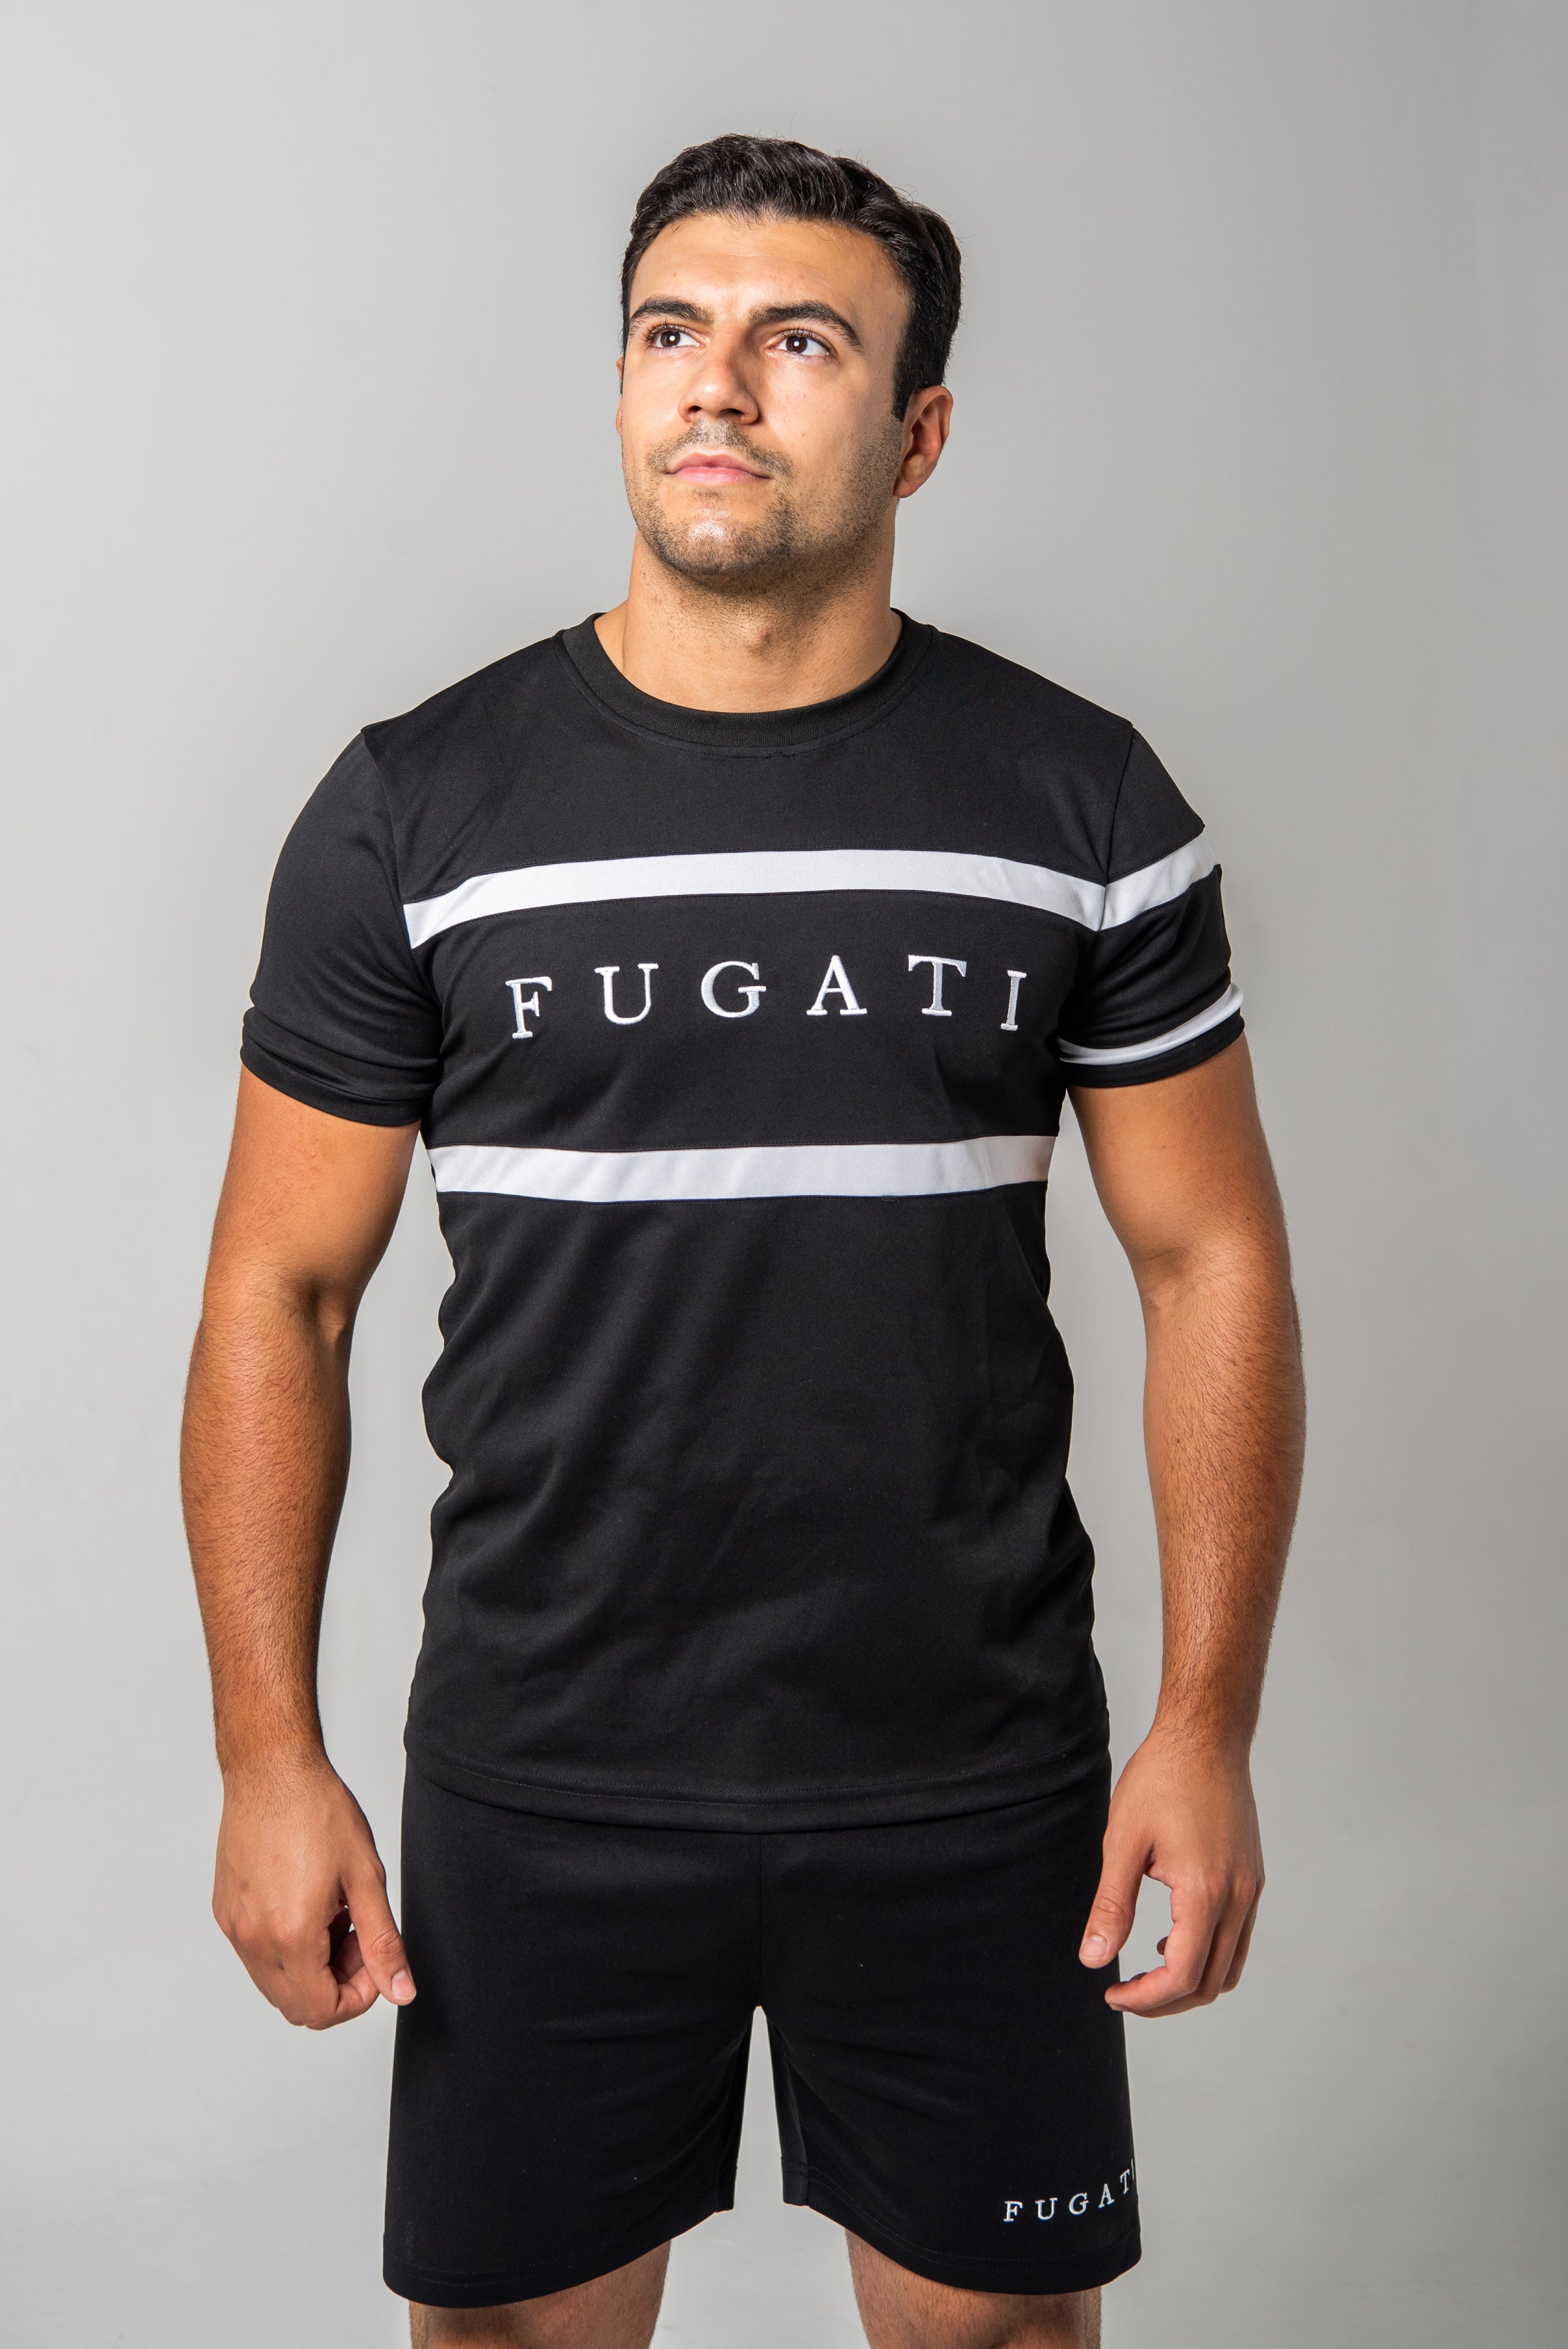 Fugati T-shirt - black